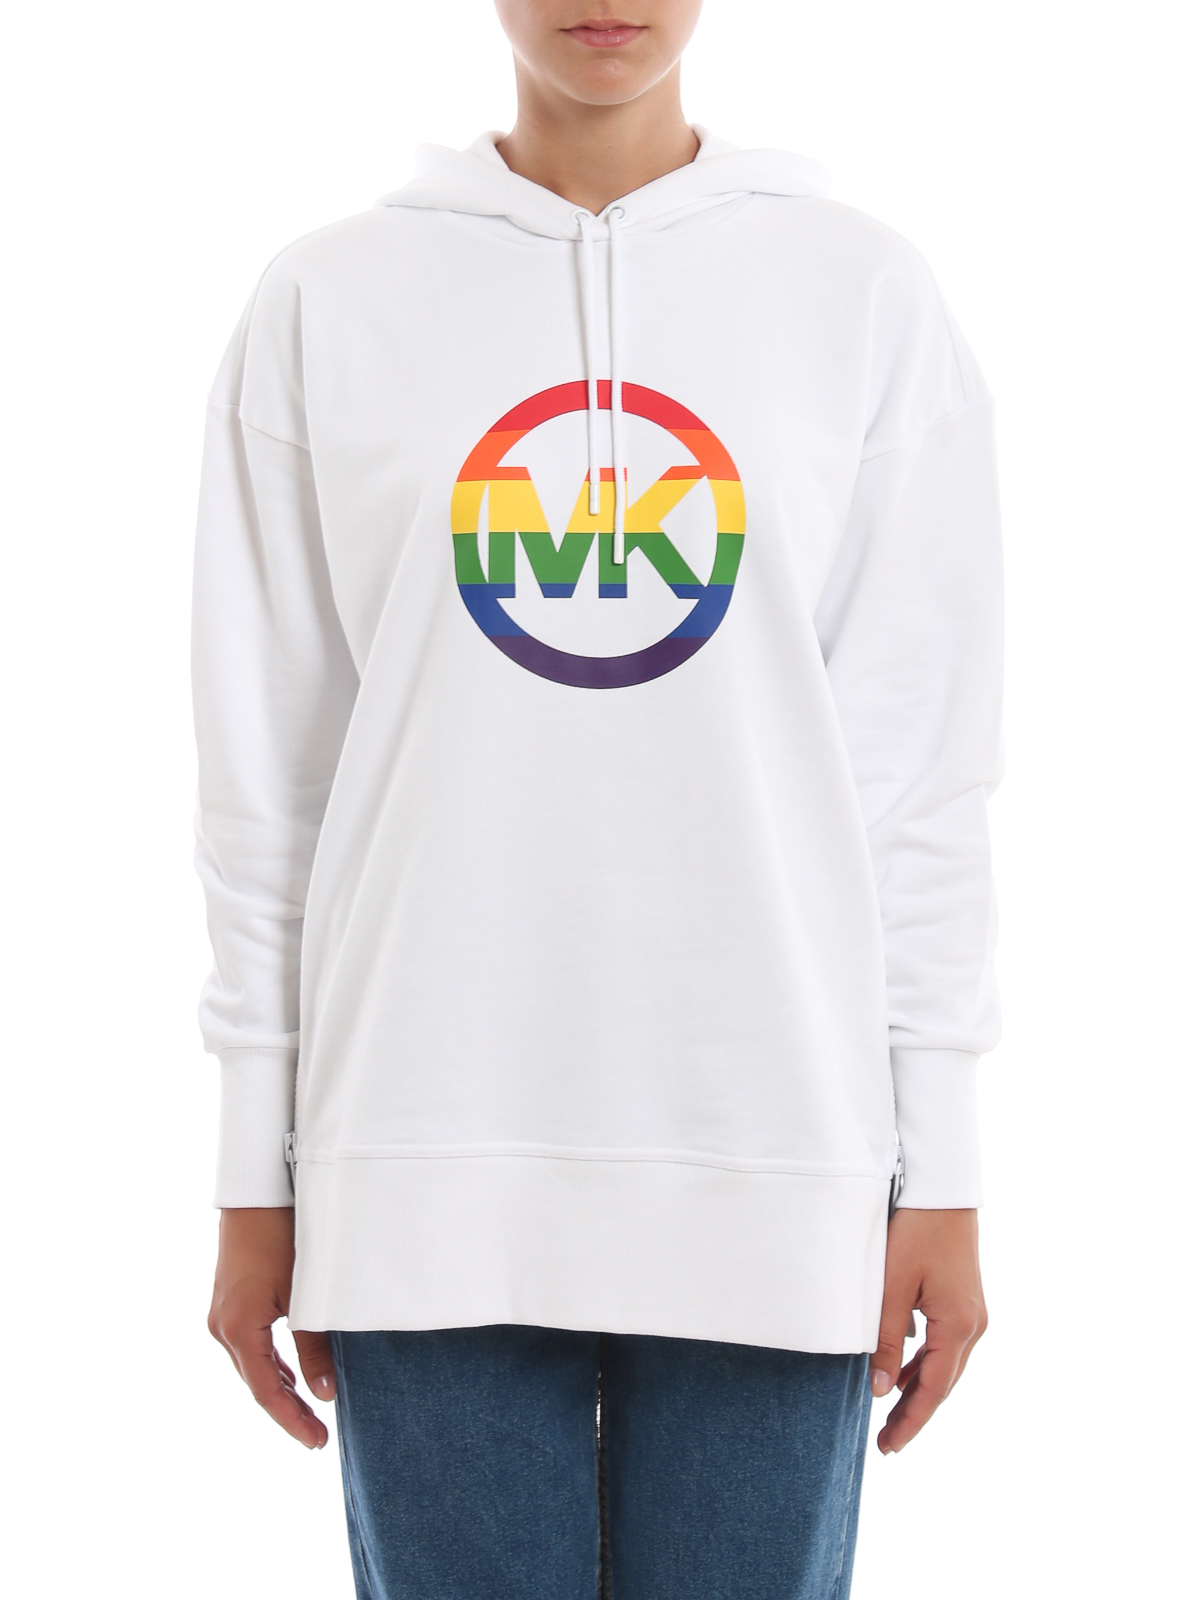 Michael Kors - Rainbow logo cotton 